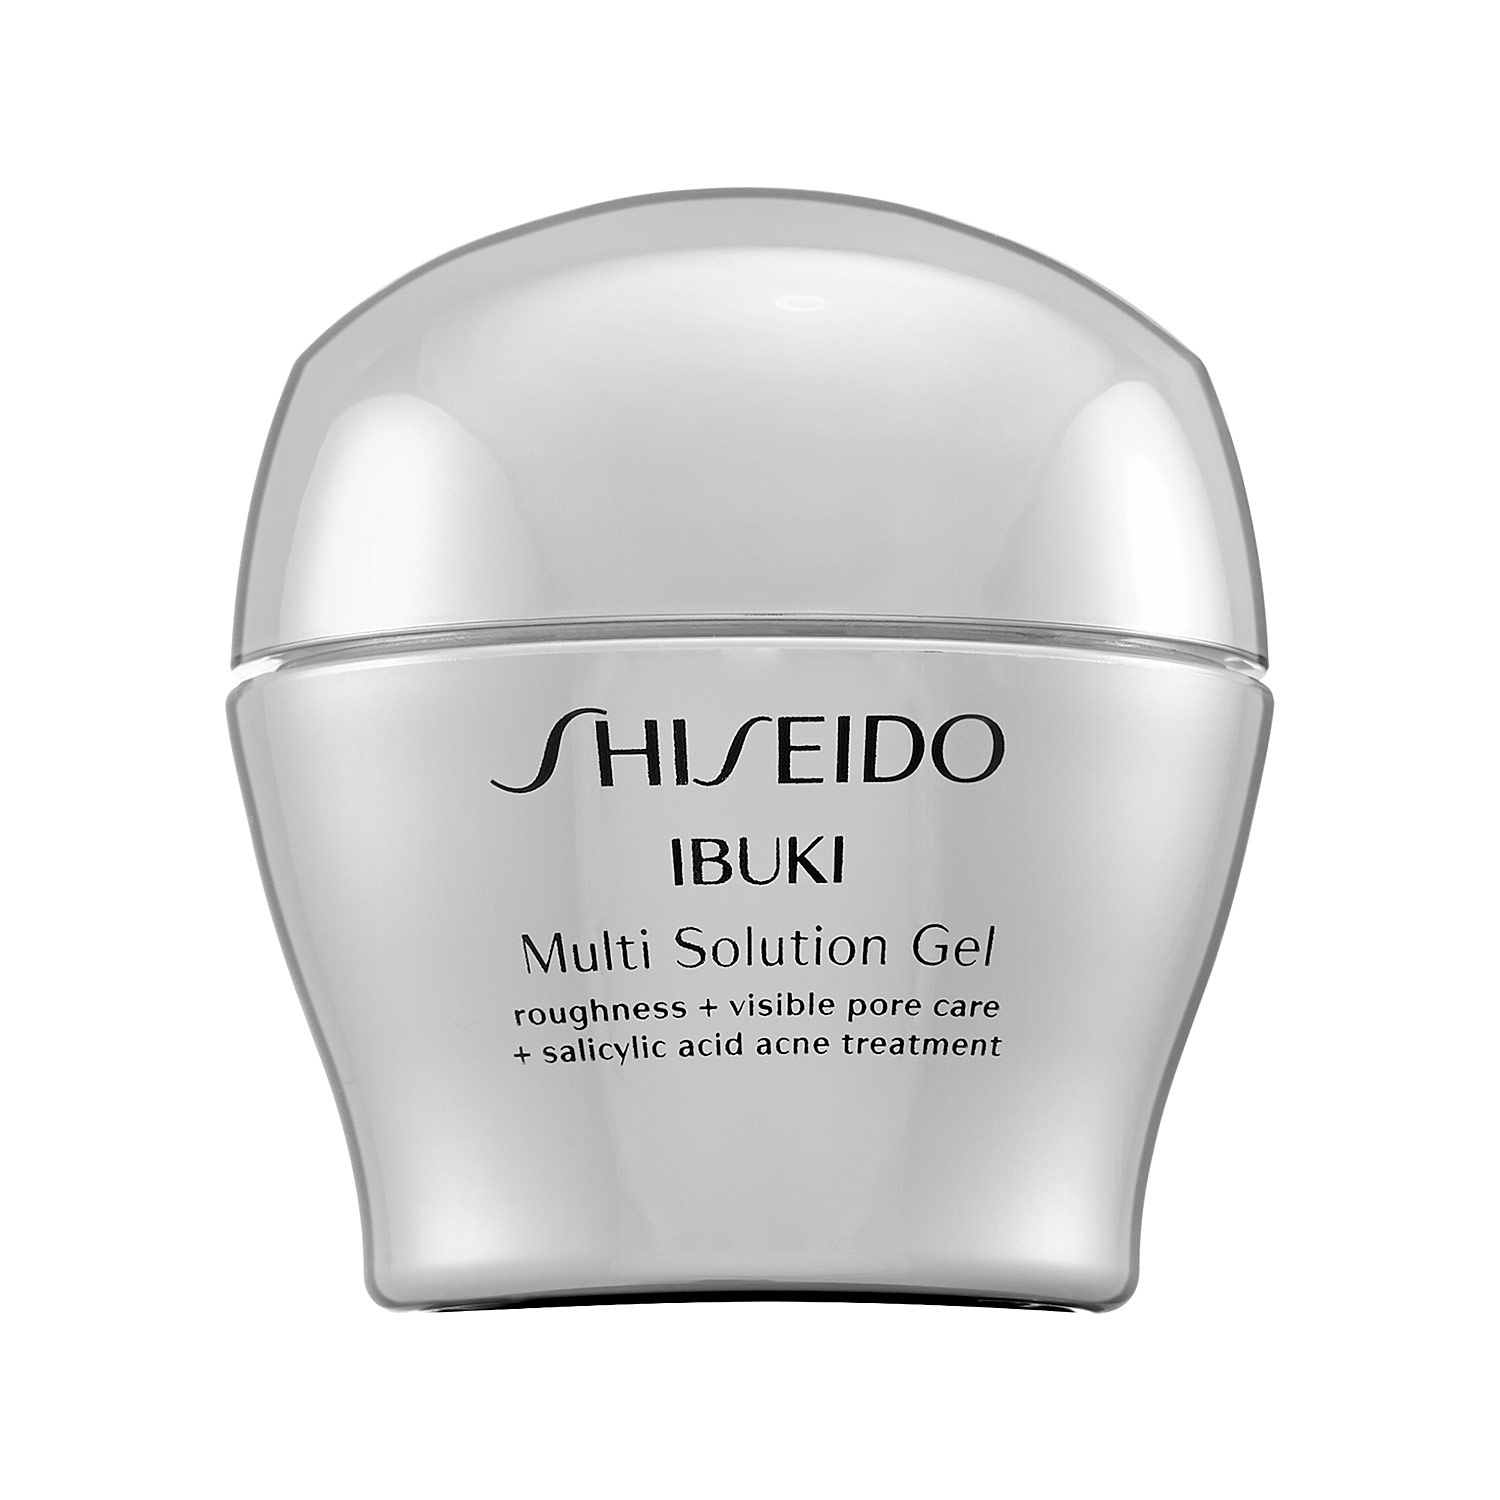 Shiseido, Shiseido IBUKI Multi Solution Gel, IBUKI, Product Review, Stephanie Ziajka, Diary of a Debutante